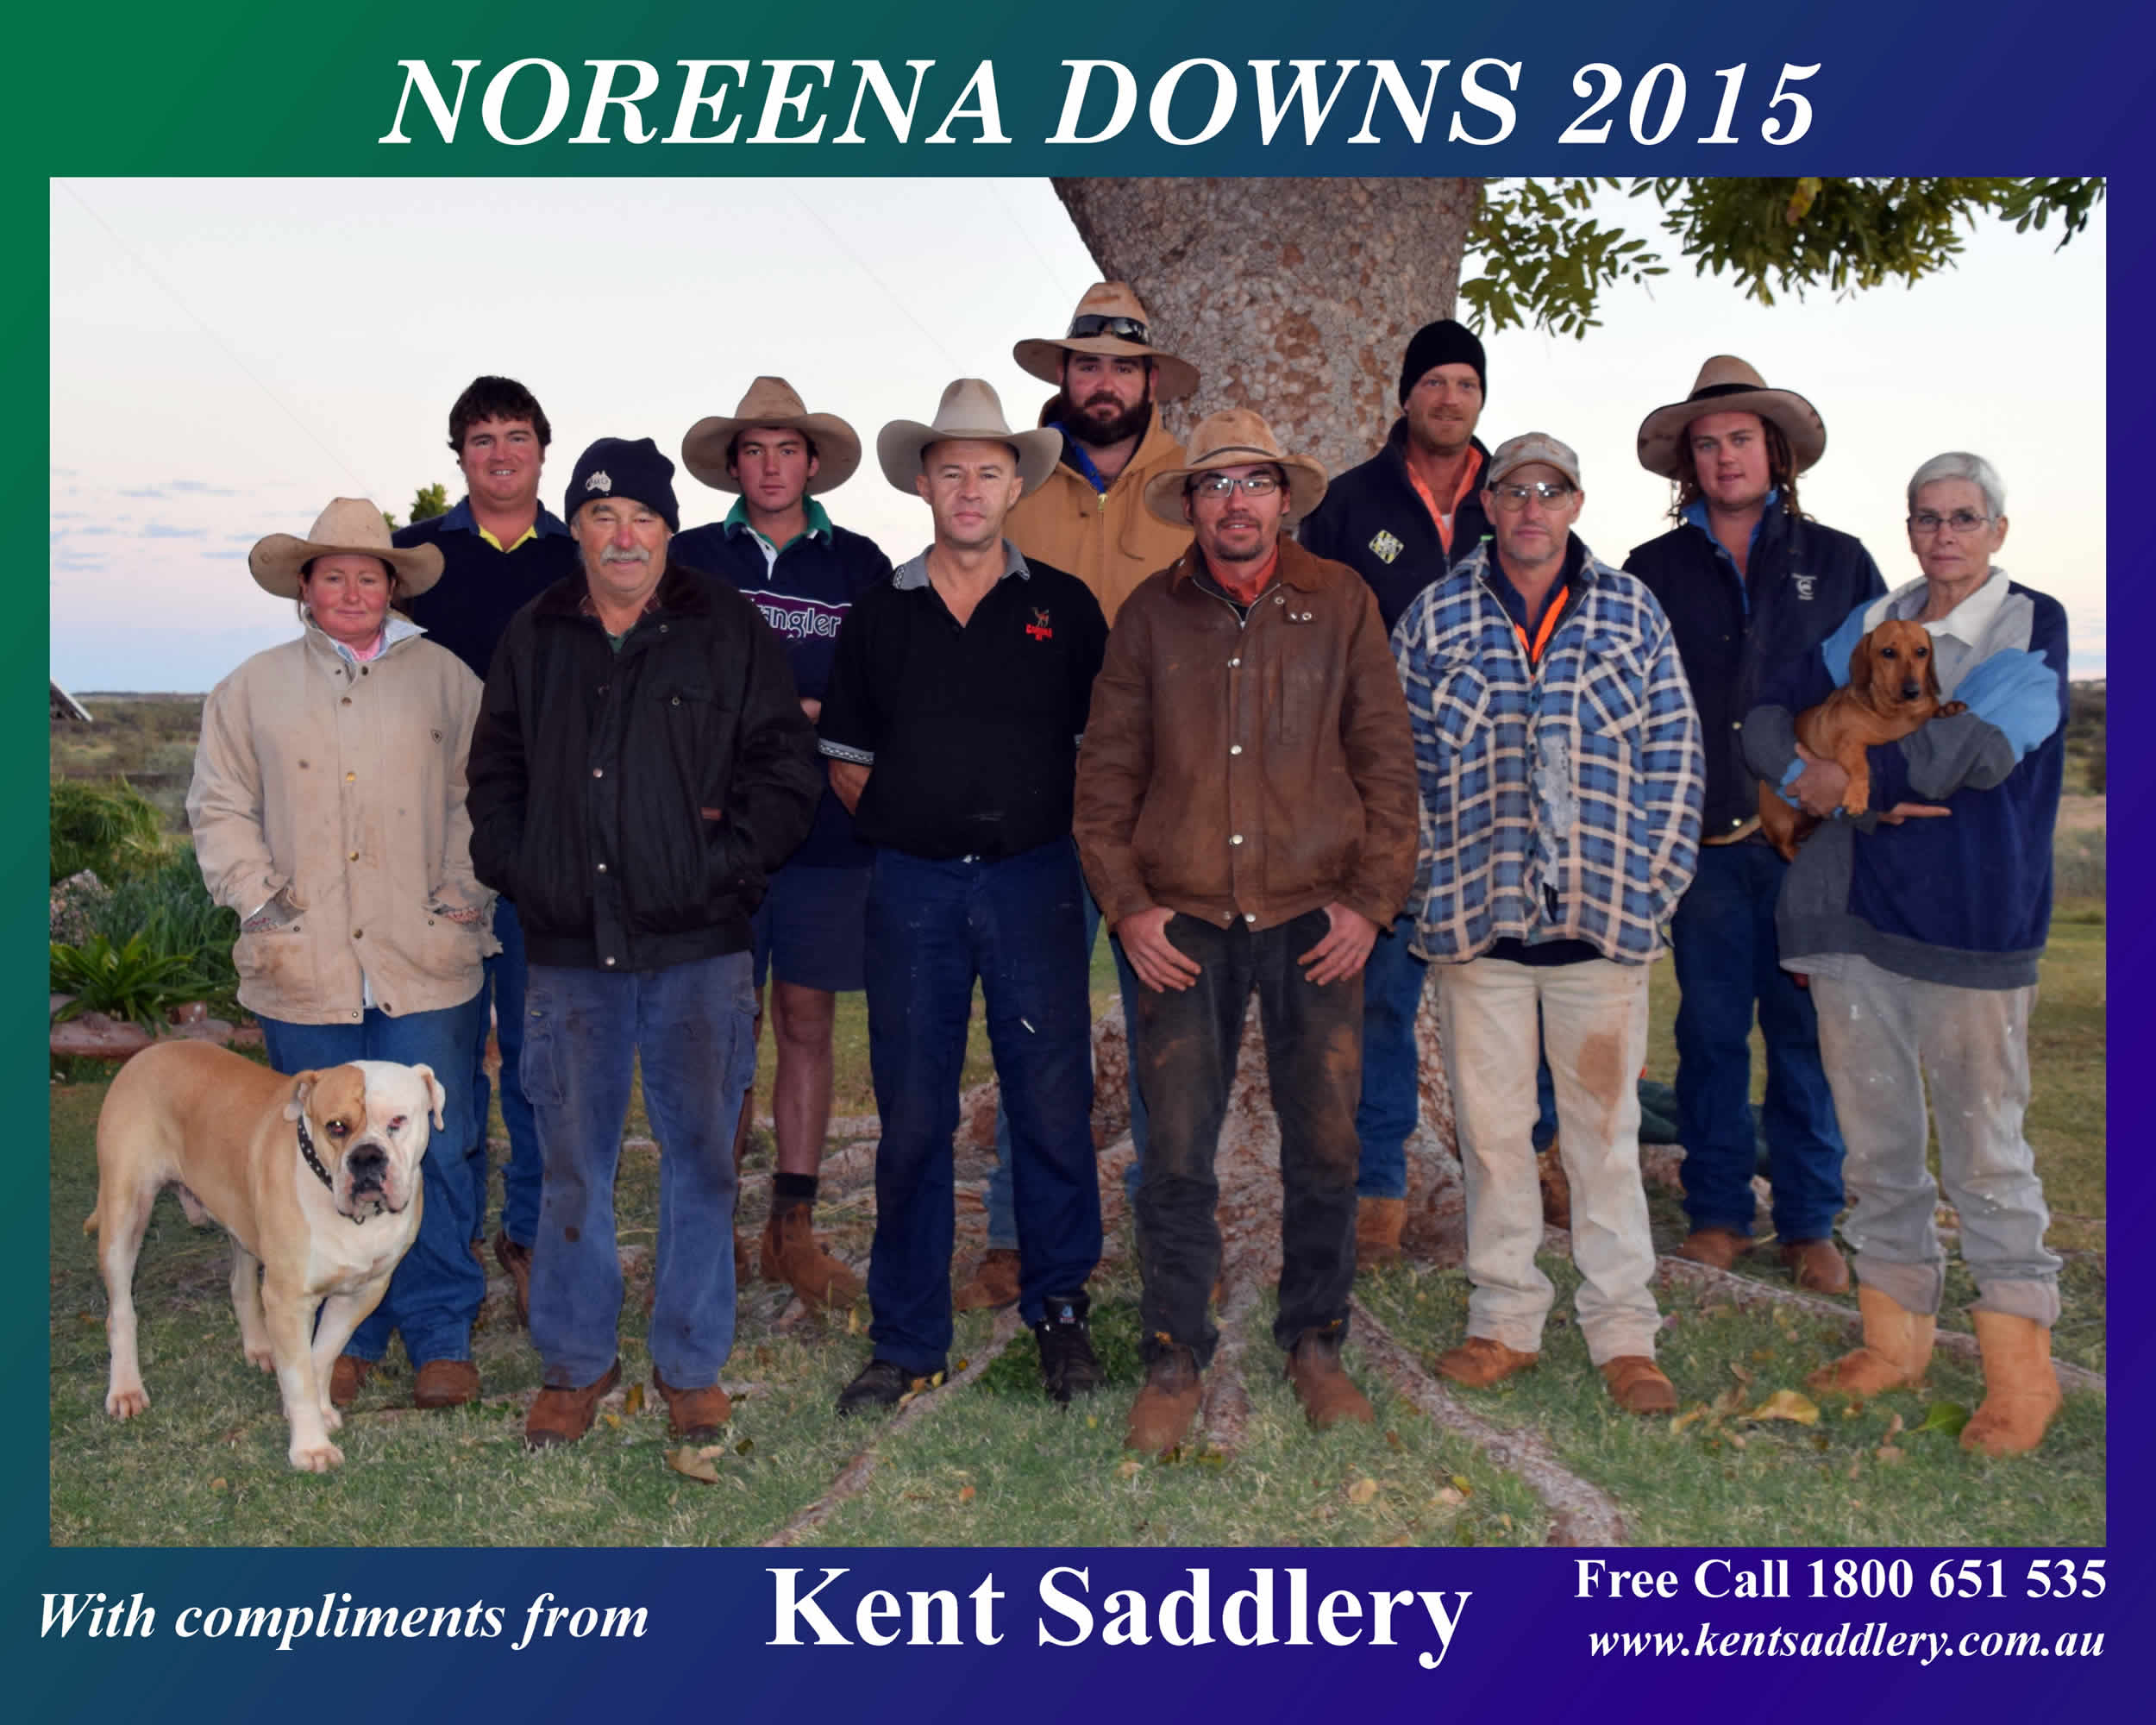 Western Australia - Noreena Downs 4